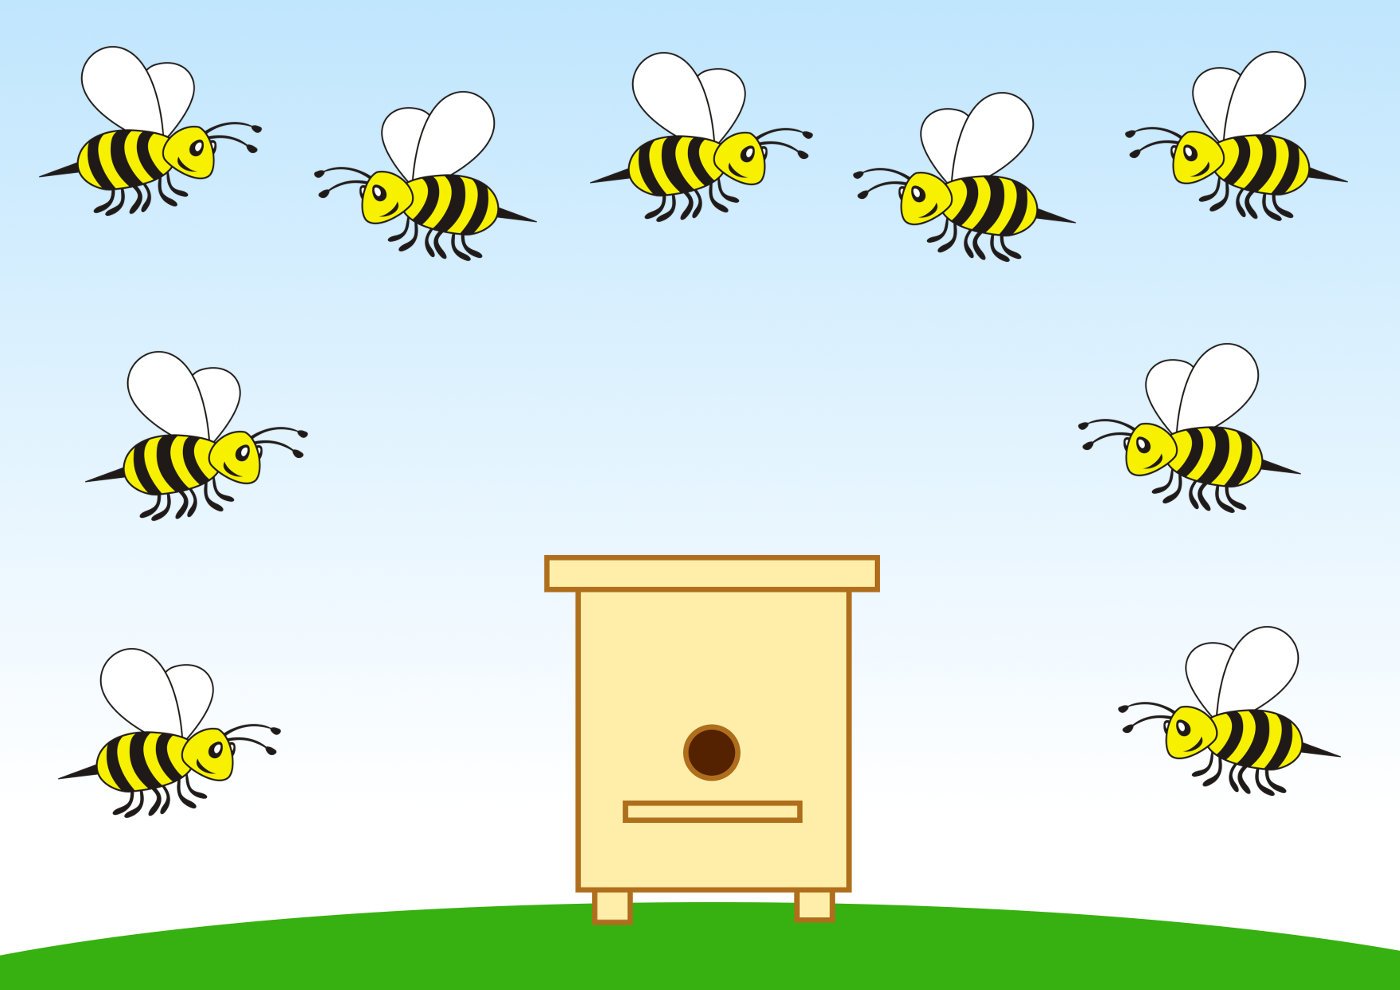 Конспект заняття для ясельної групи, тема: «Бджоли»